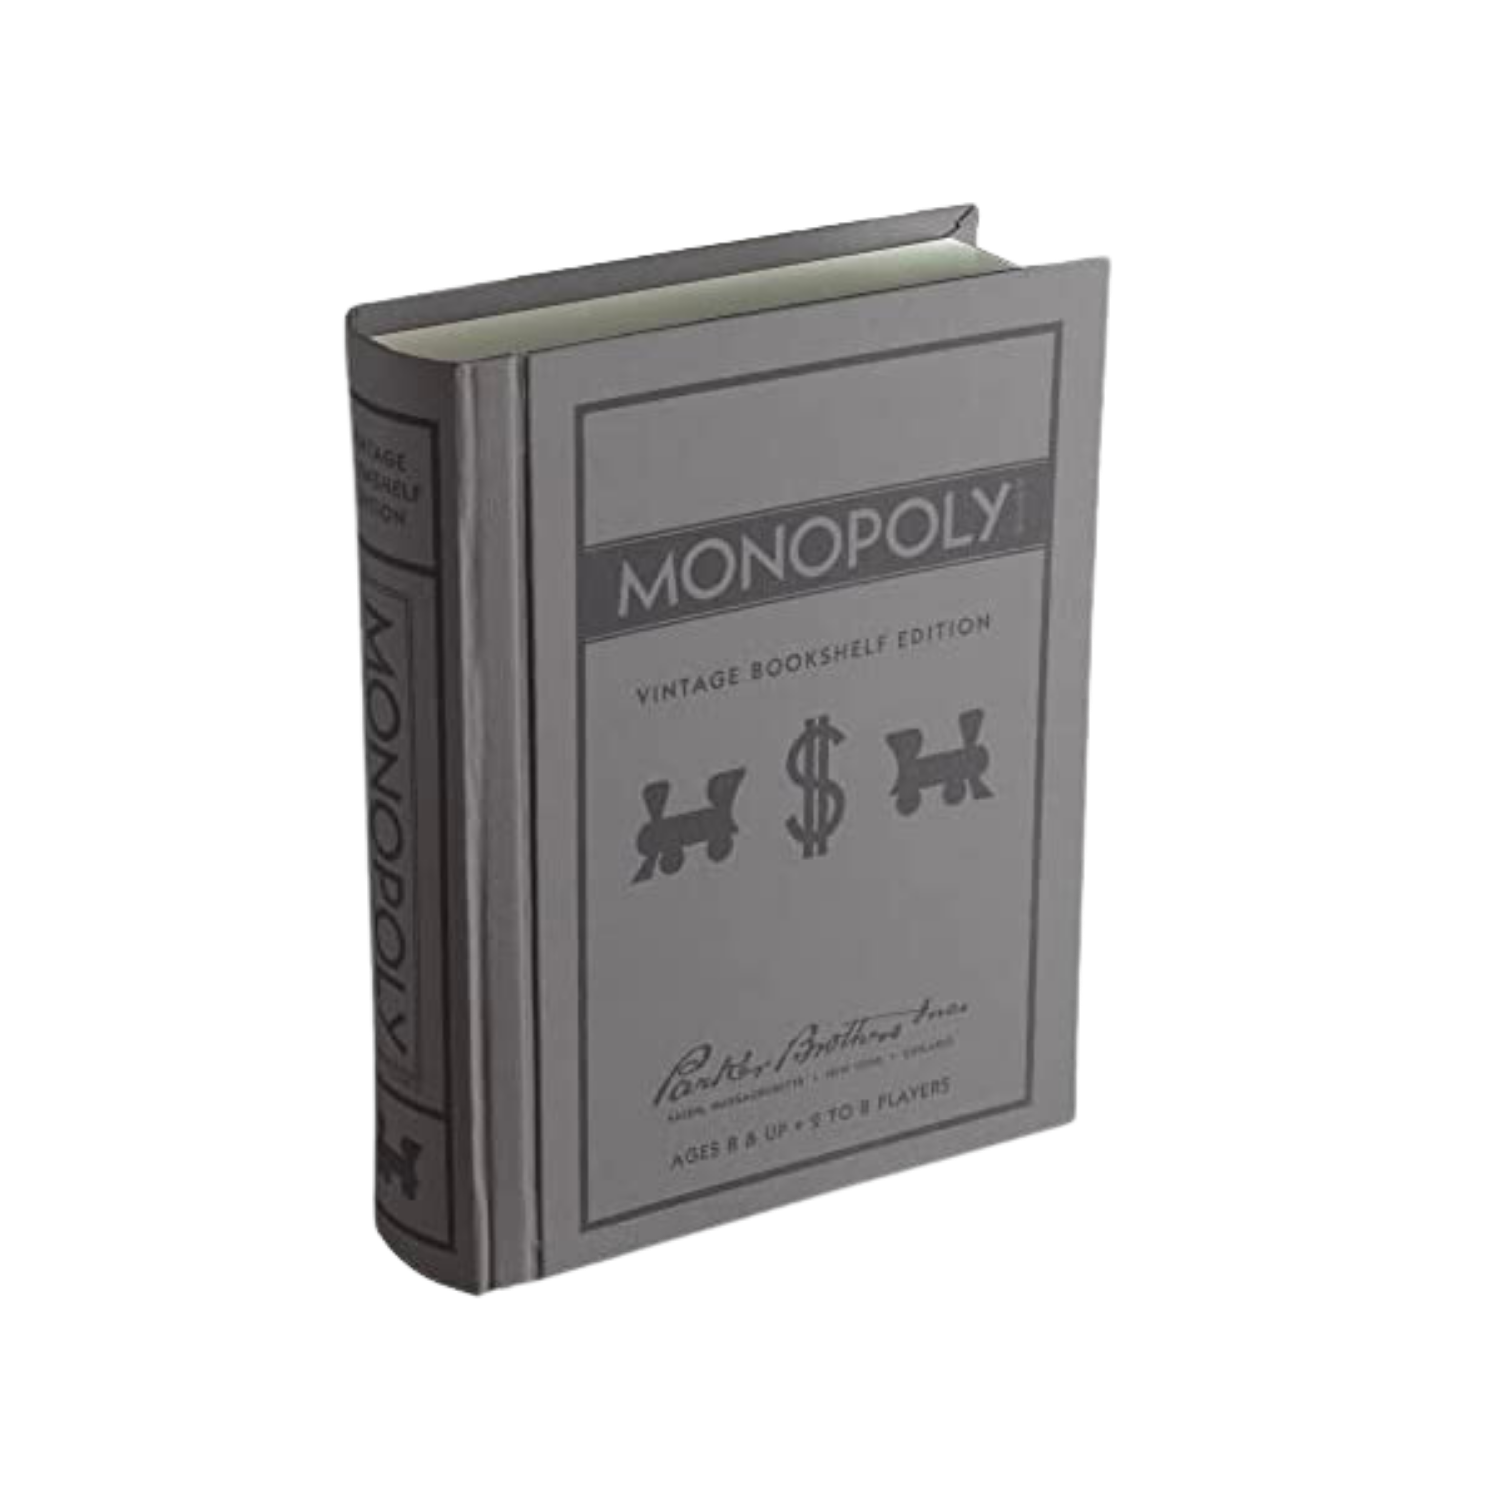 Monopoly Vintage Linen Book Edition